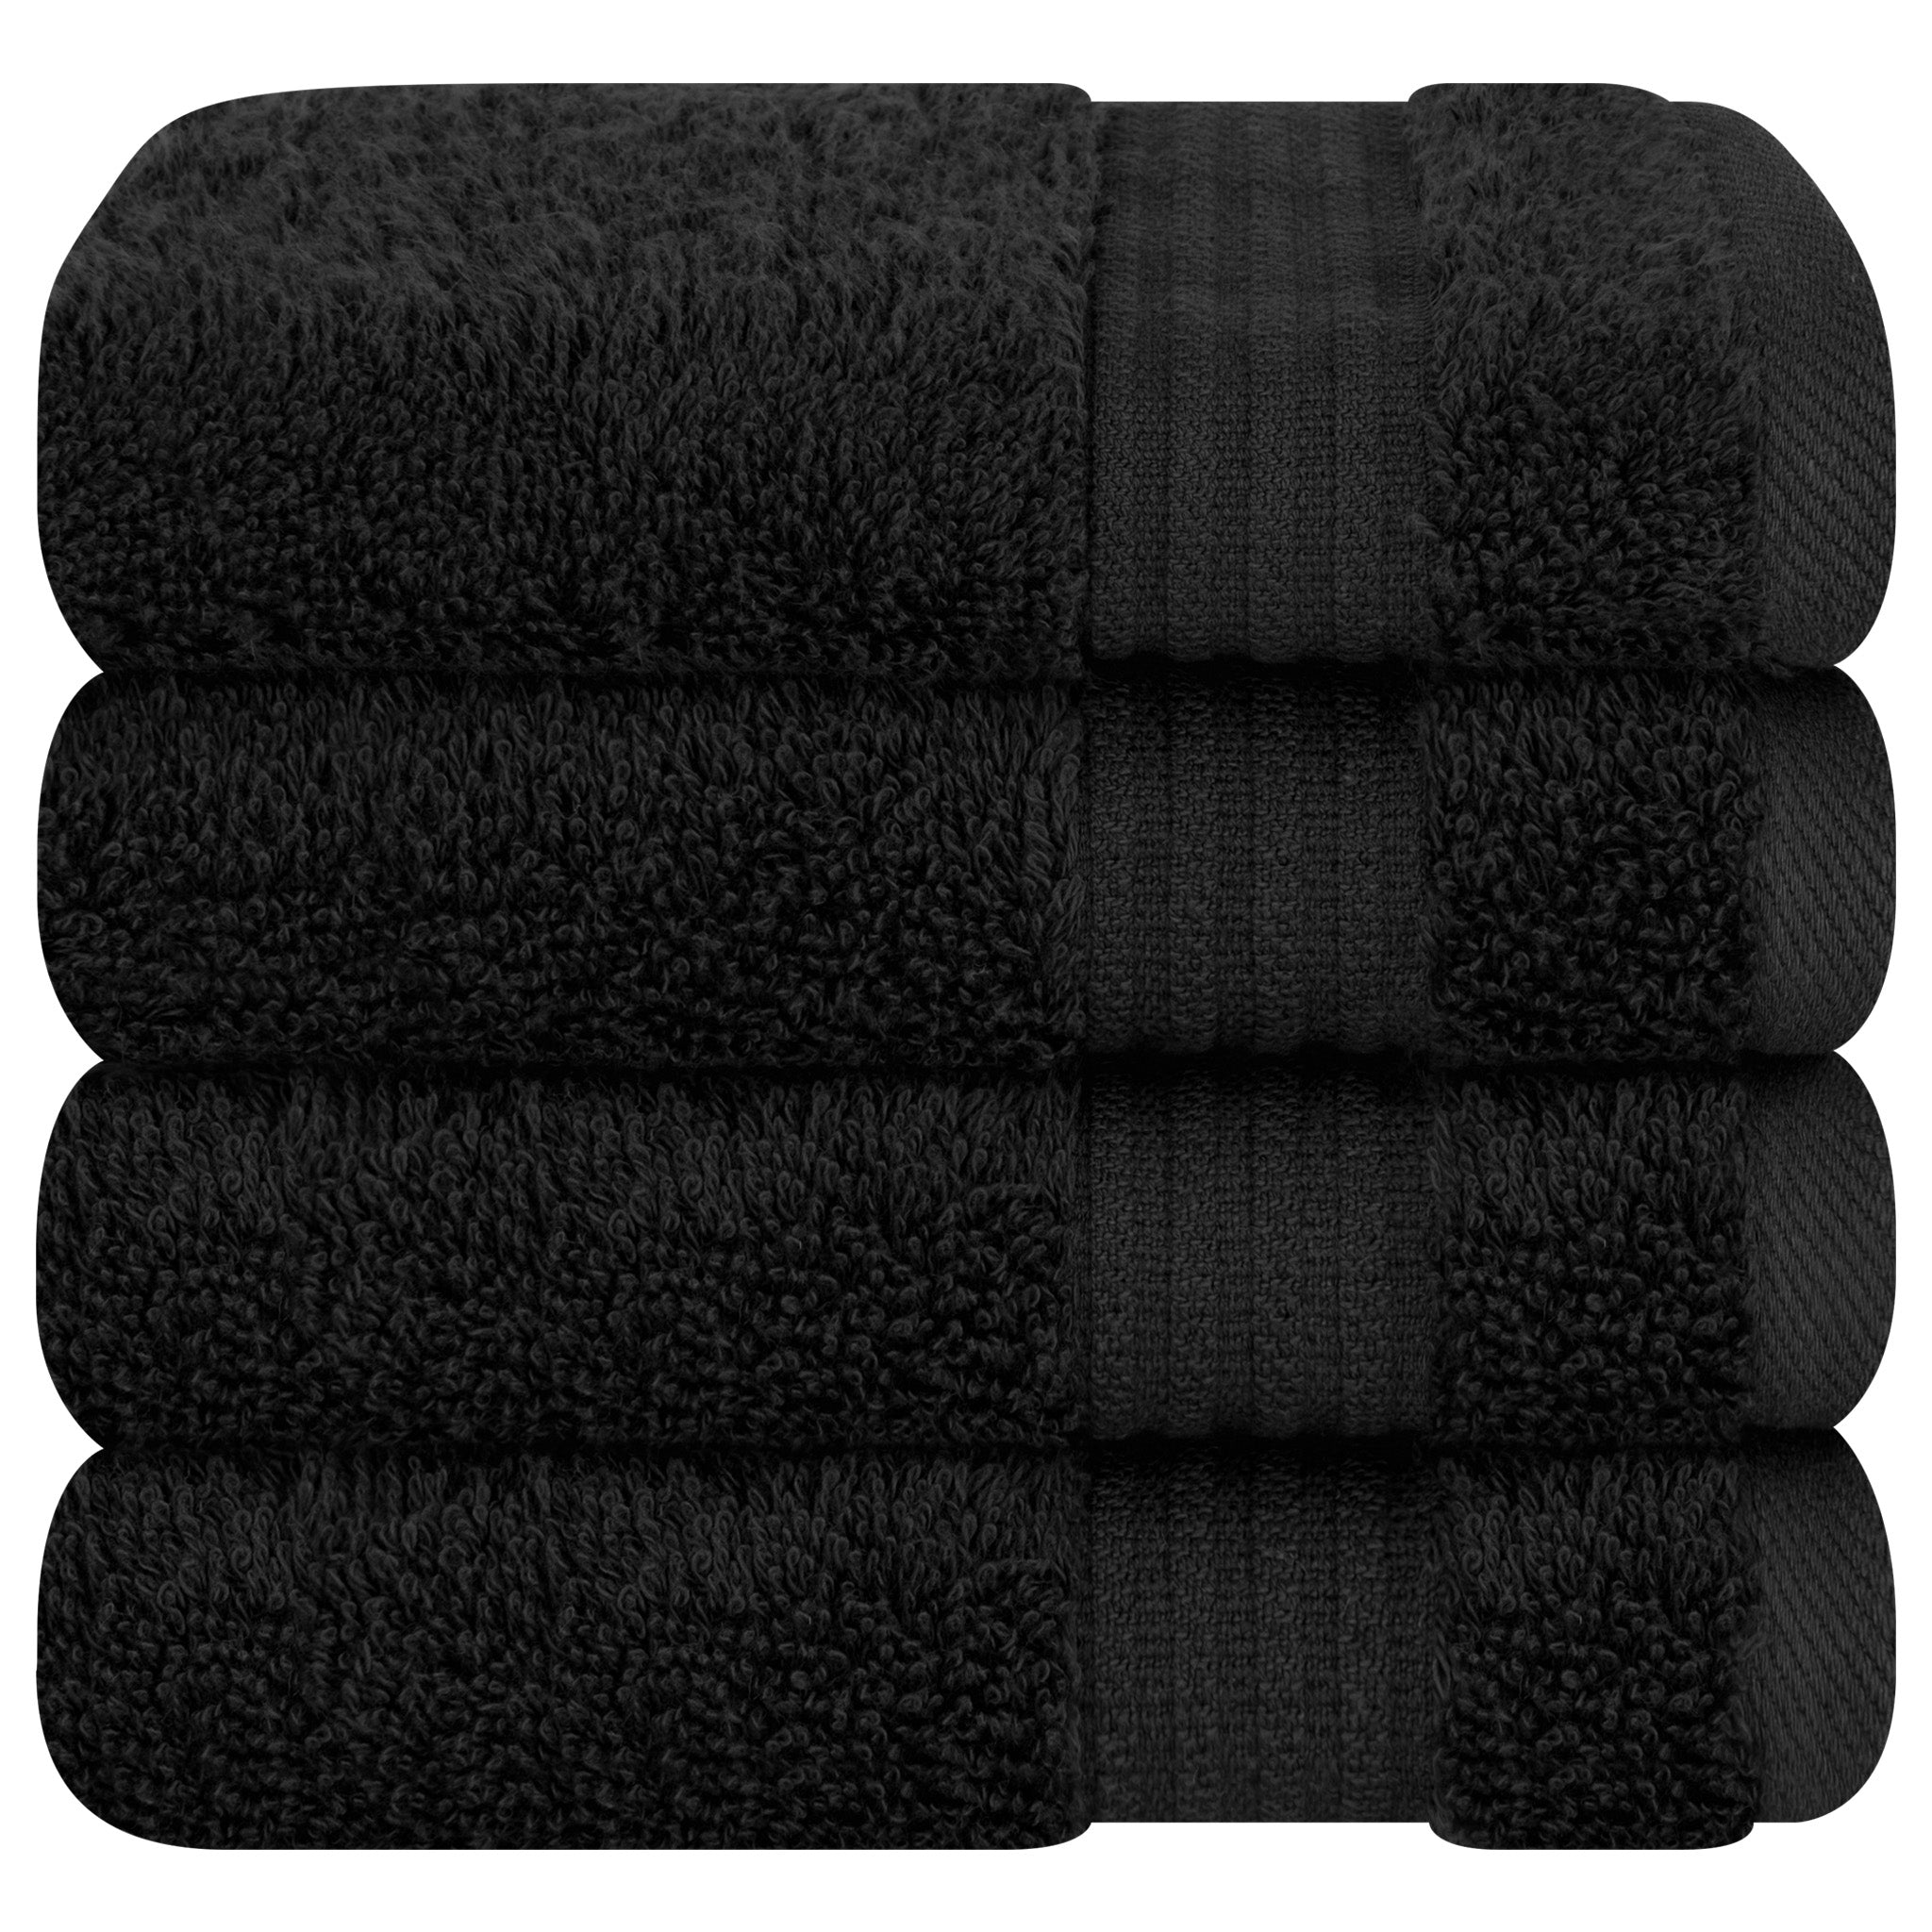 American Soft Linen Bekos 100% Cotton Turkish Towels, 4 Piece Washcloth Towel Set -black-05